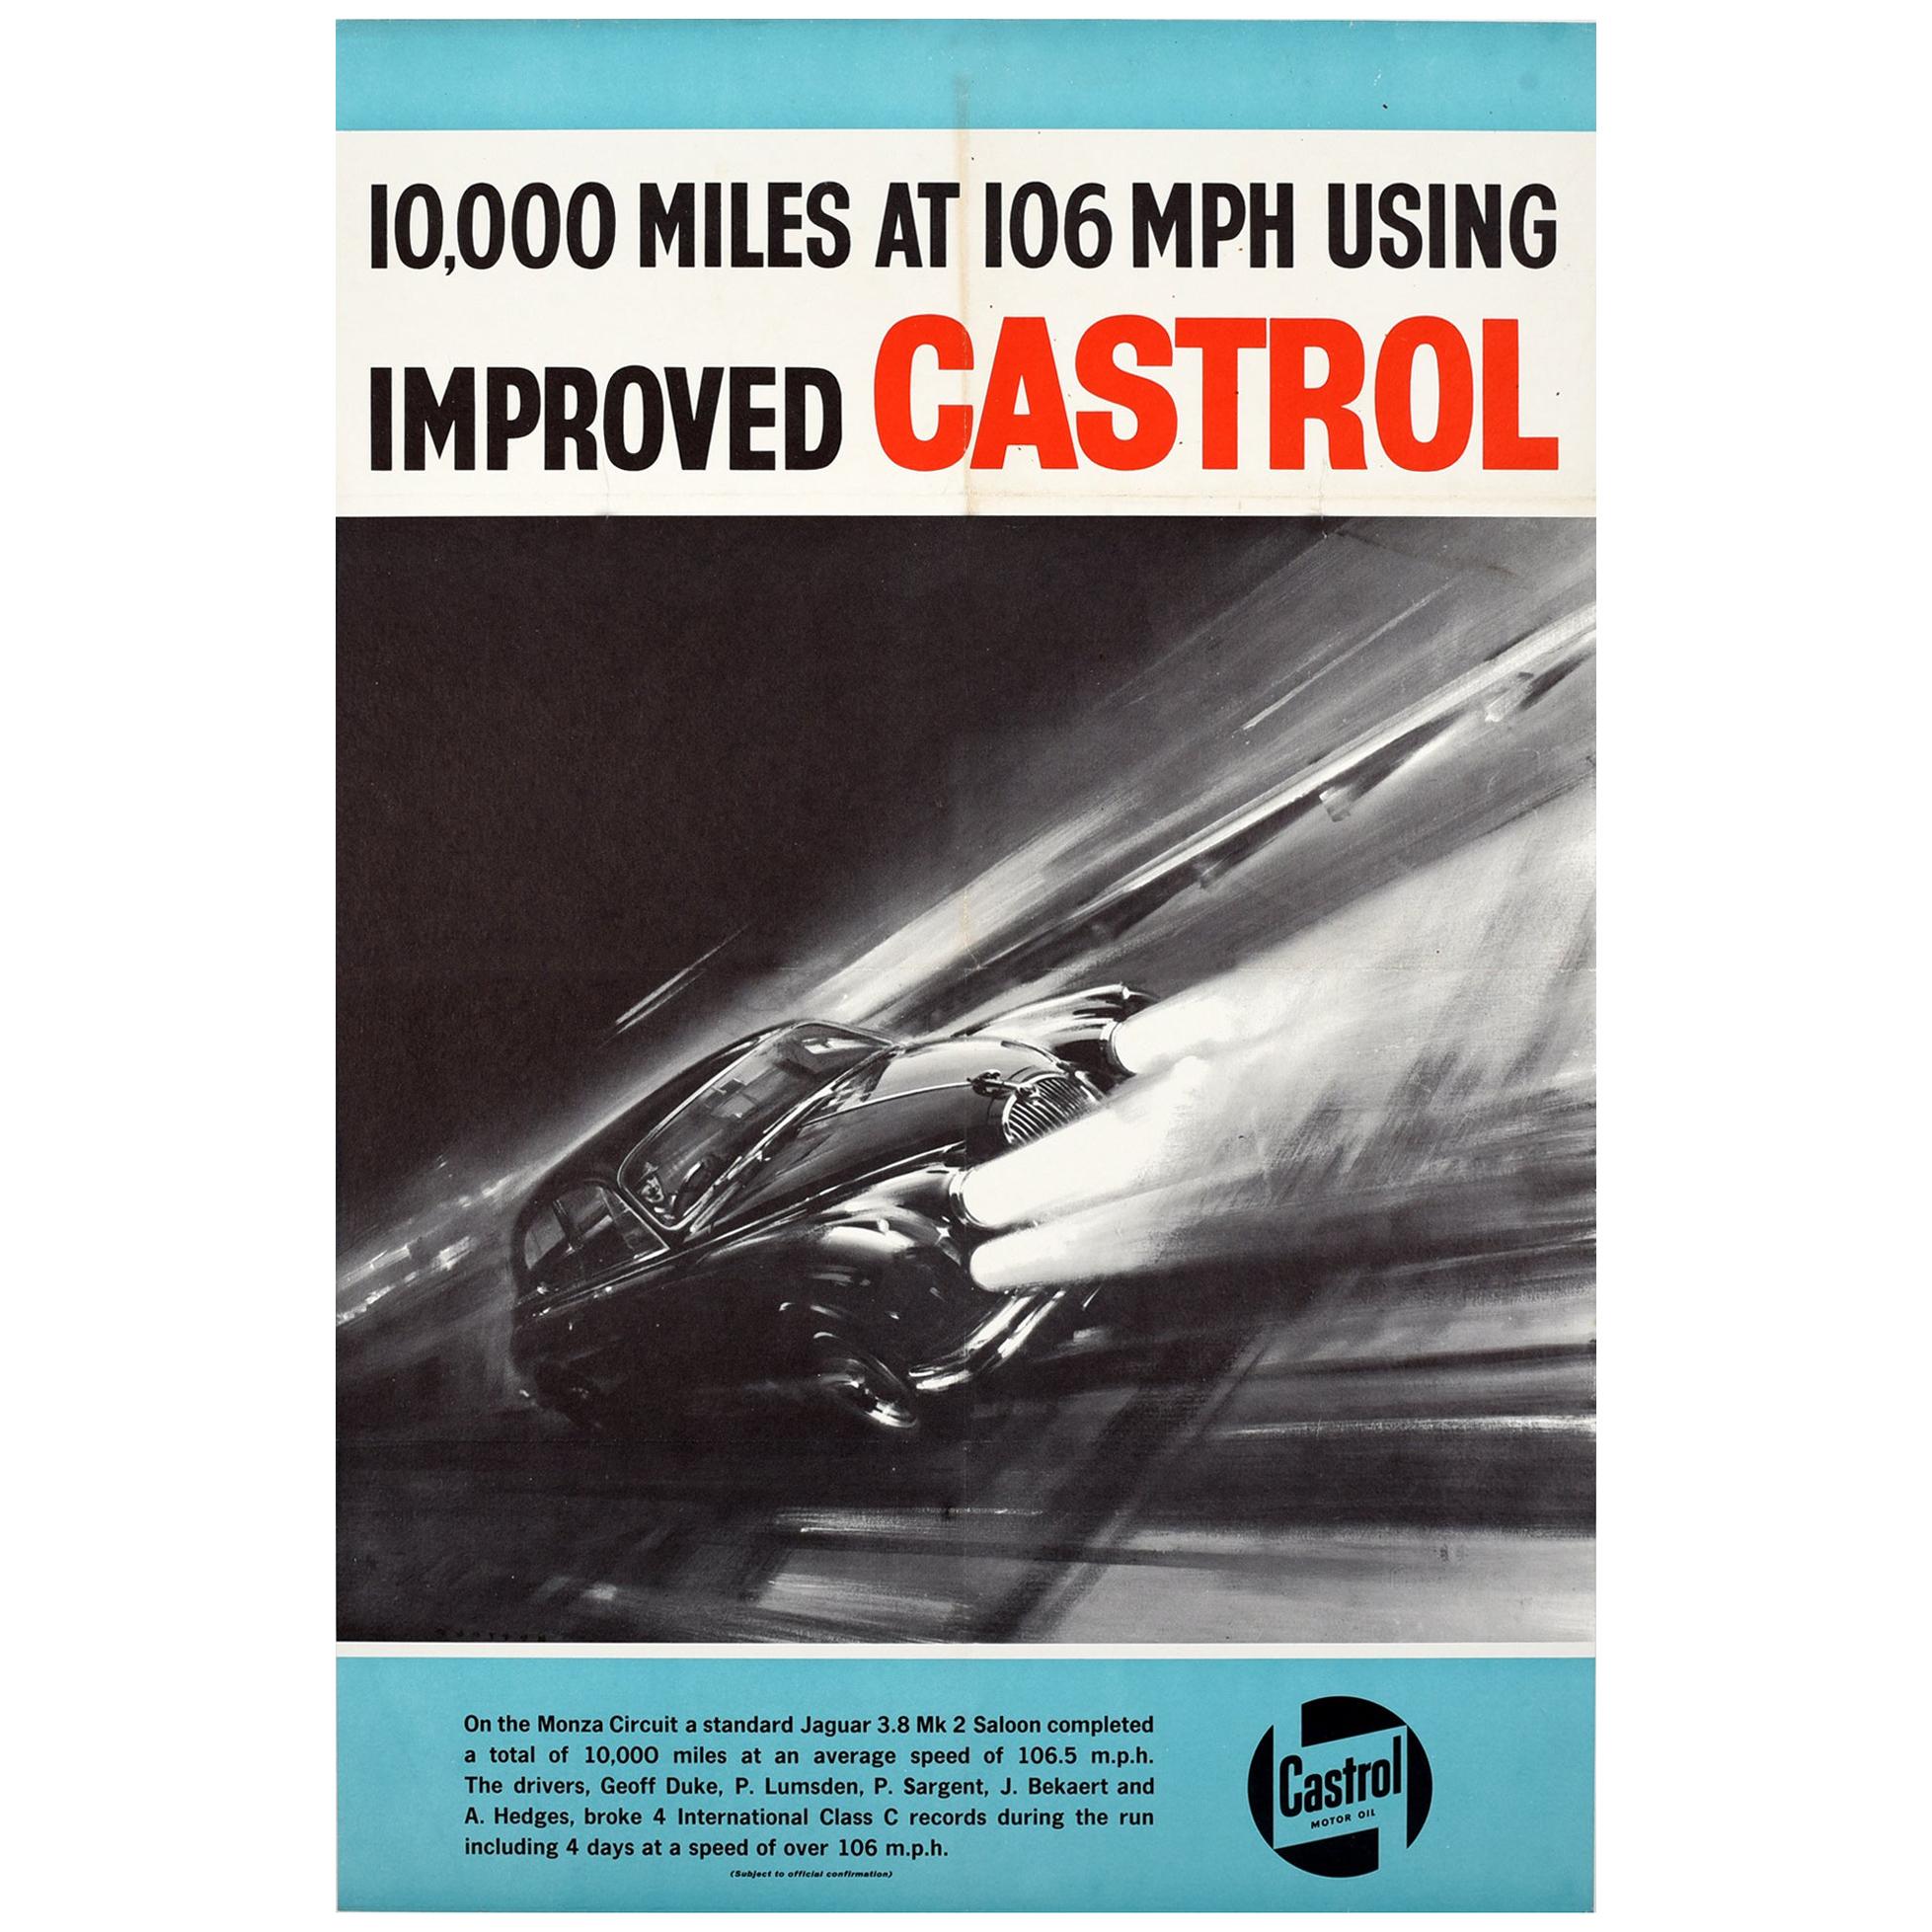 Original Vintage Castrol Motor Racing Poster Monza Circuit Jaguar 3.8 Mark 2 Car